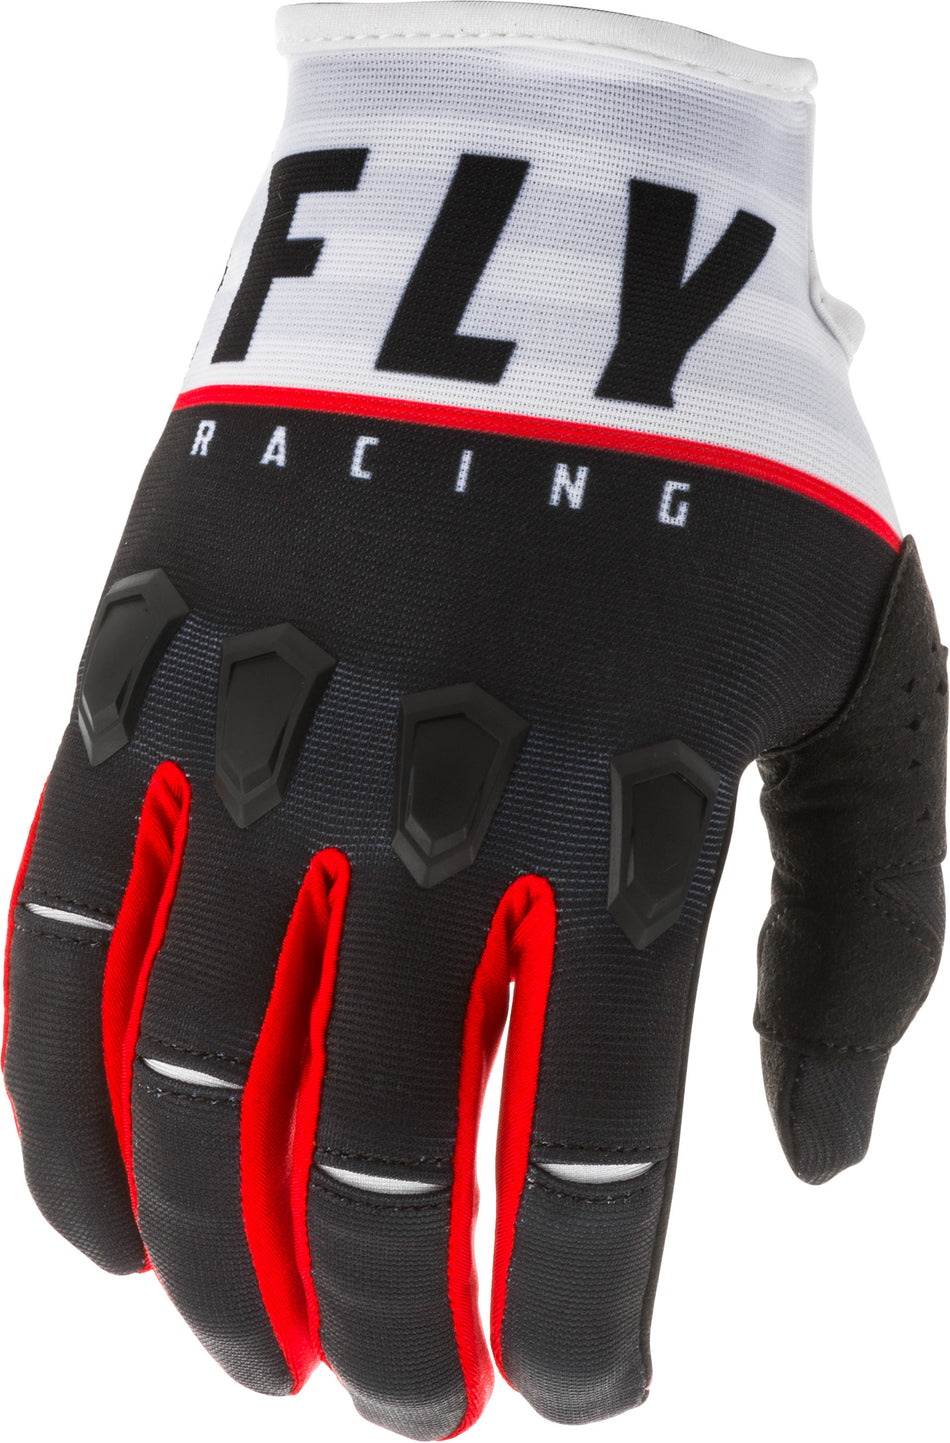 FLY RACING Kinetic K120 Gloves Black/White/Red Sz 08 373-41308